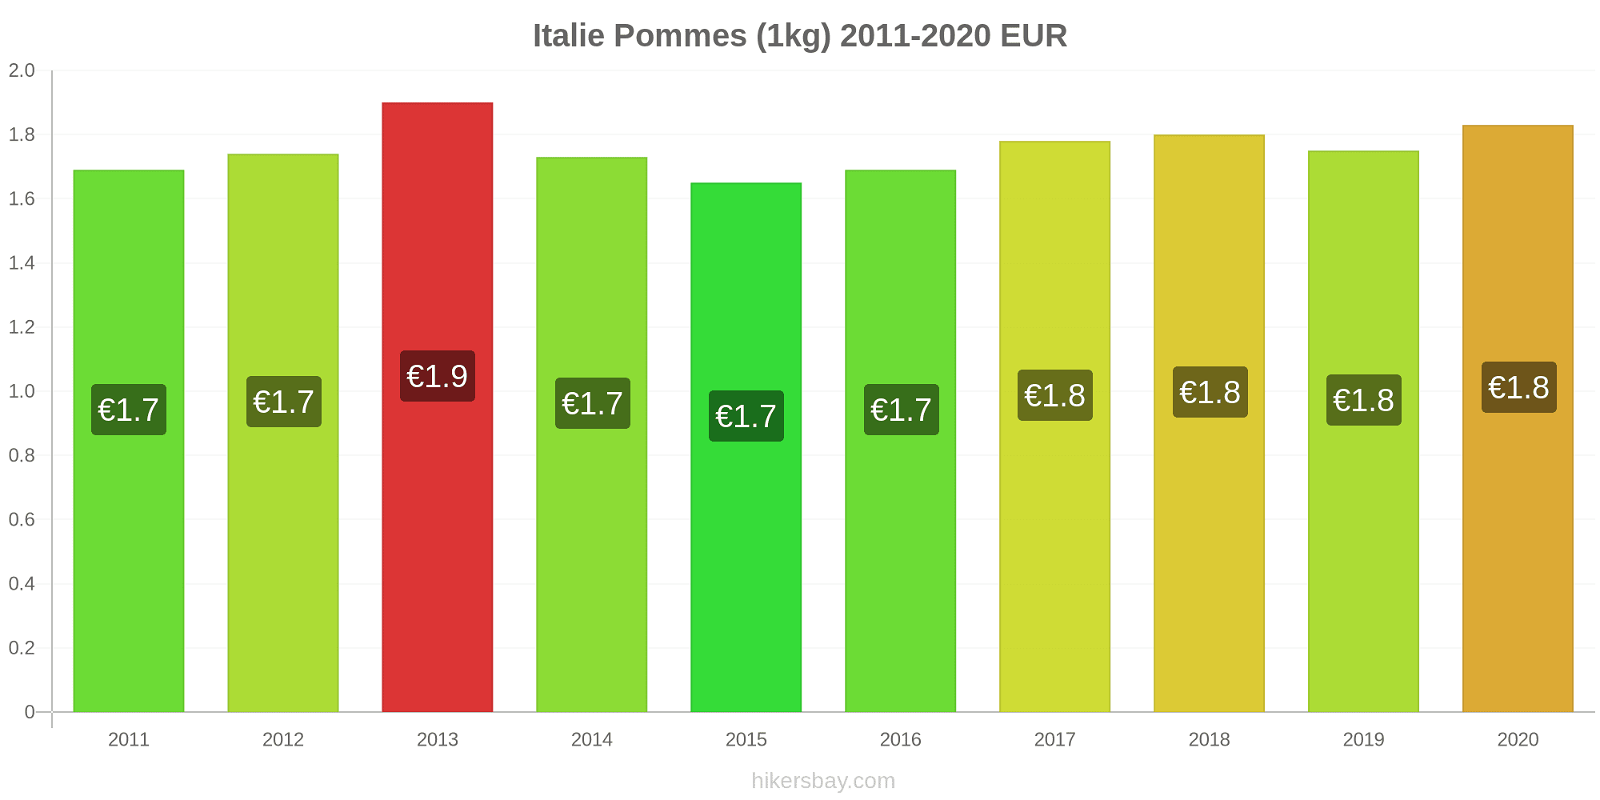 Italie changements de prix Pommes (1kg) hikersbay.com